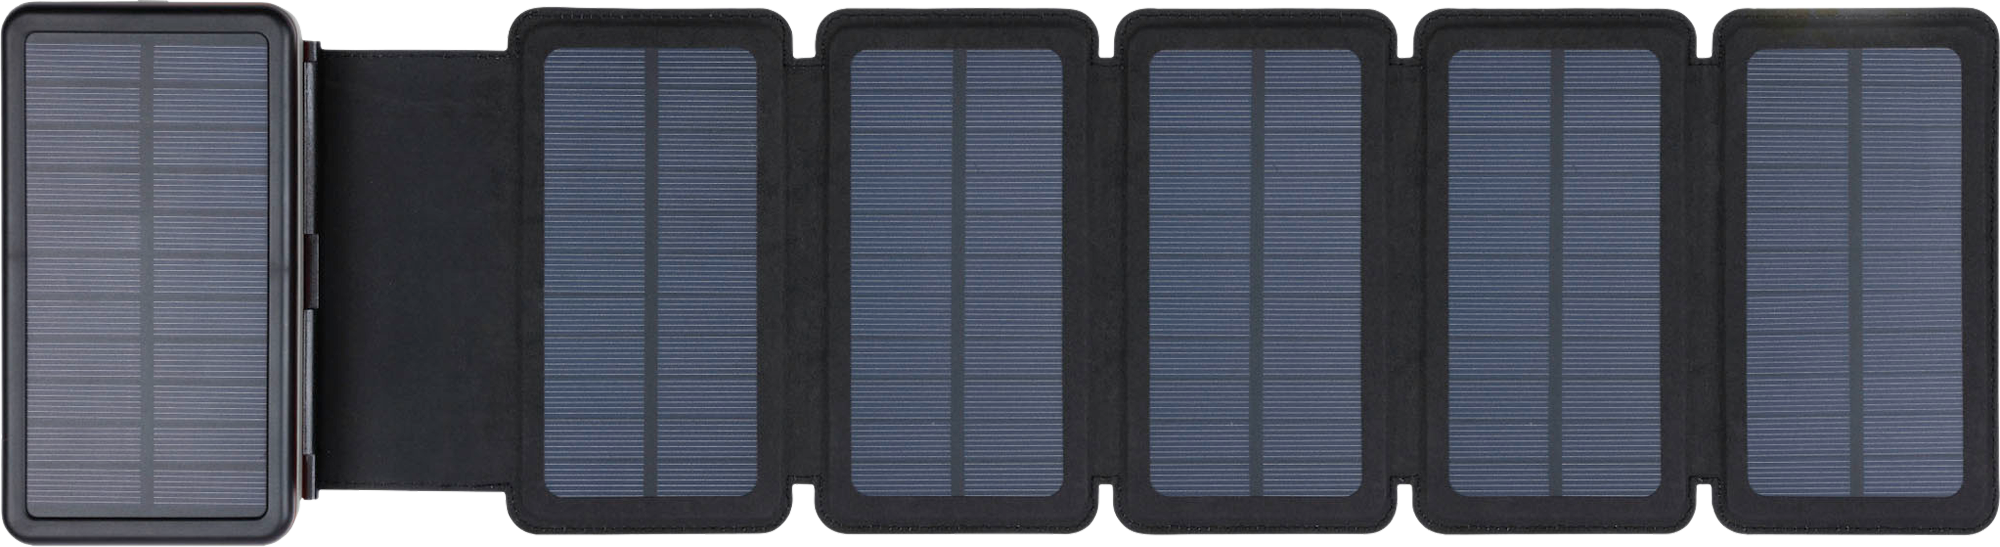 Sandberg 420-73 Solar 6 Panel mit Powerbank schwarz 20000 mAh